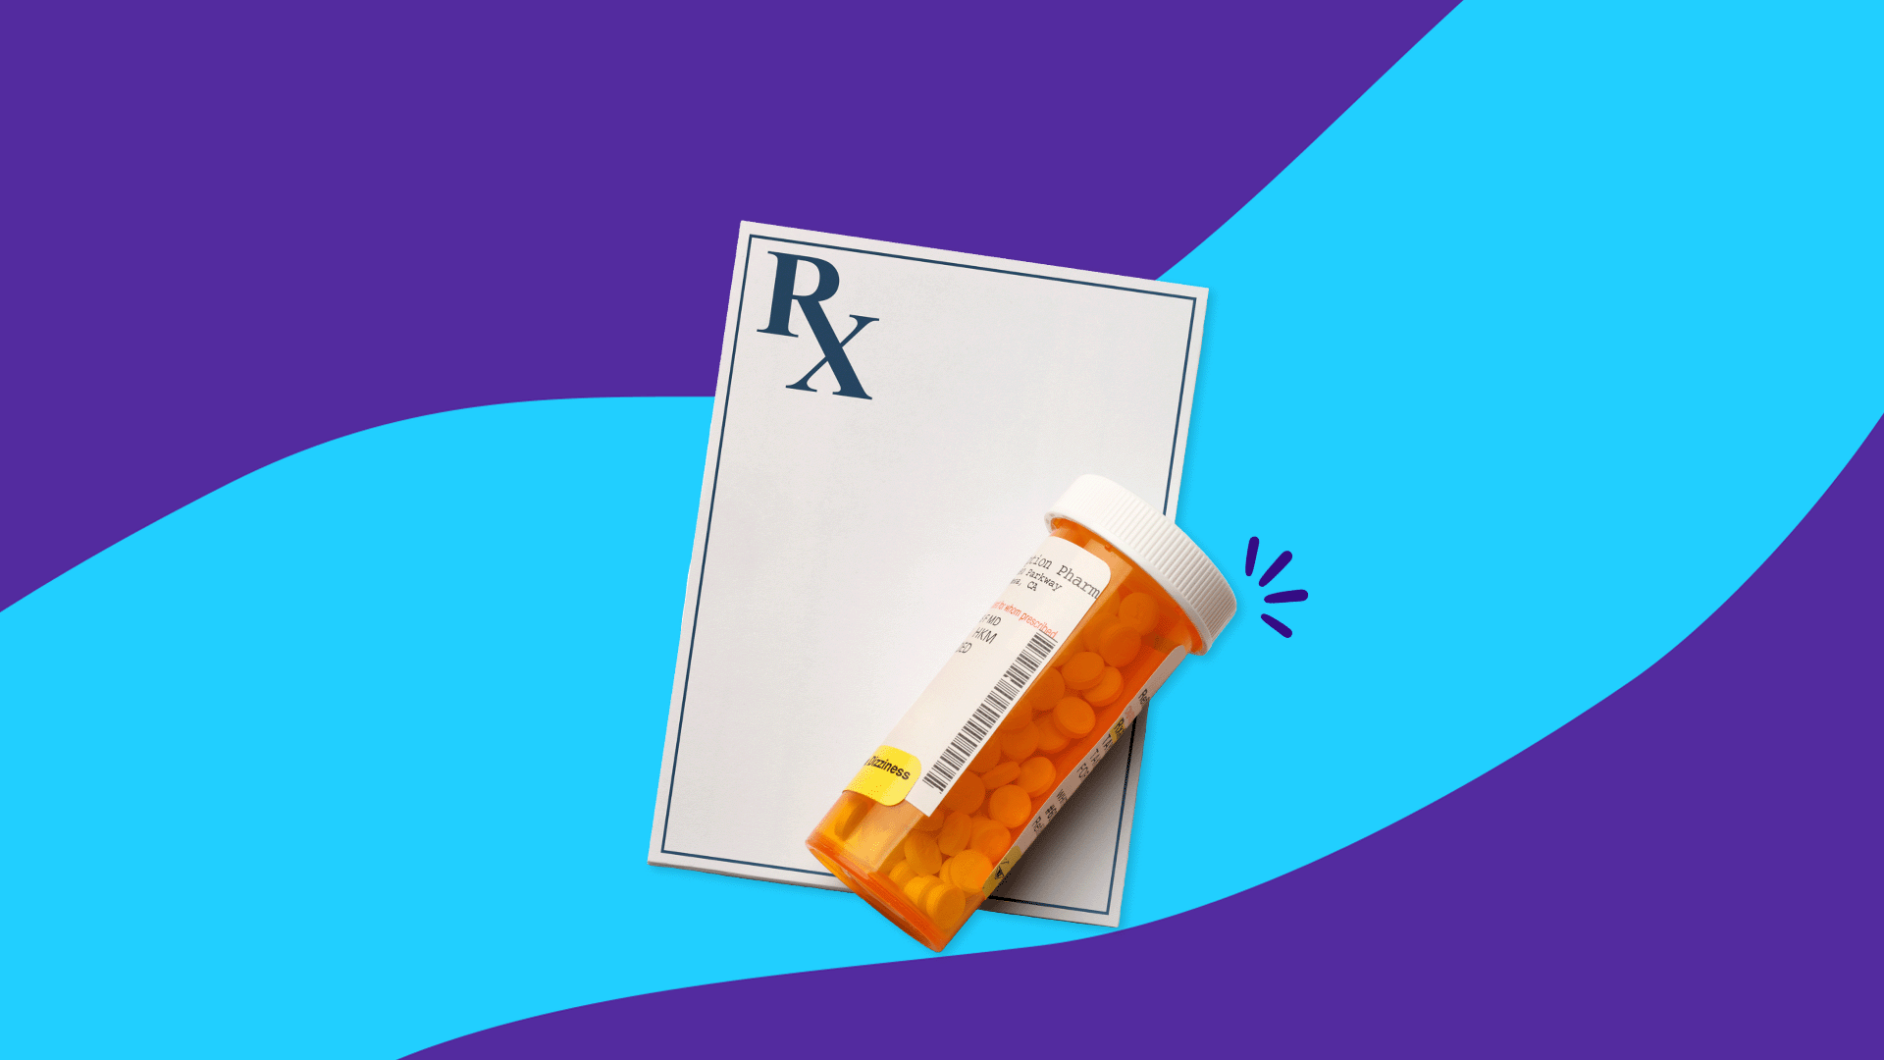 Rx pill bottle with prescription pad: Cephalexin interactions